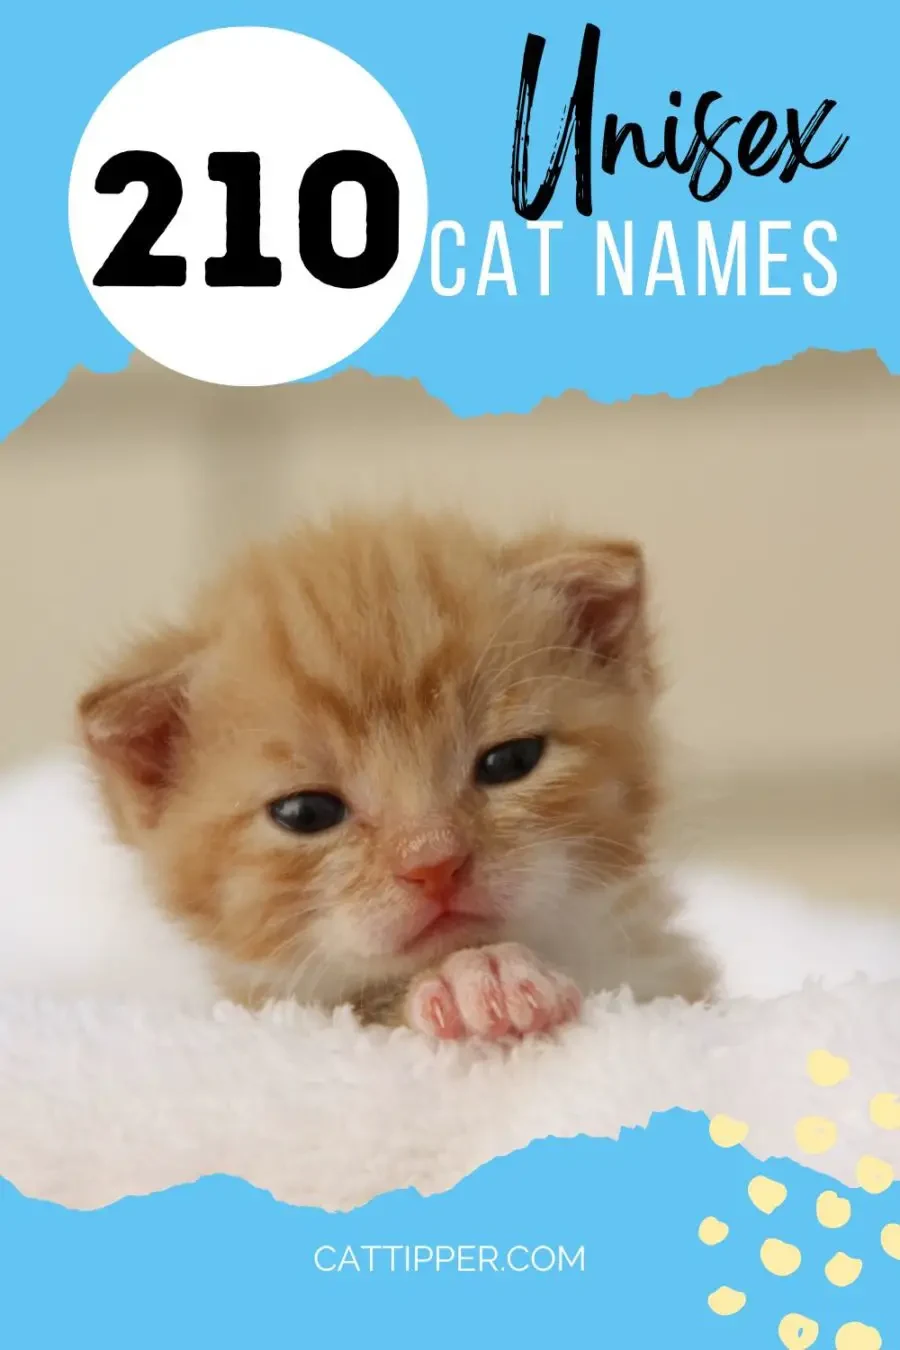 image of tiny kitten in Pinterest pin on unisex cat names